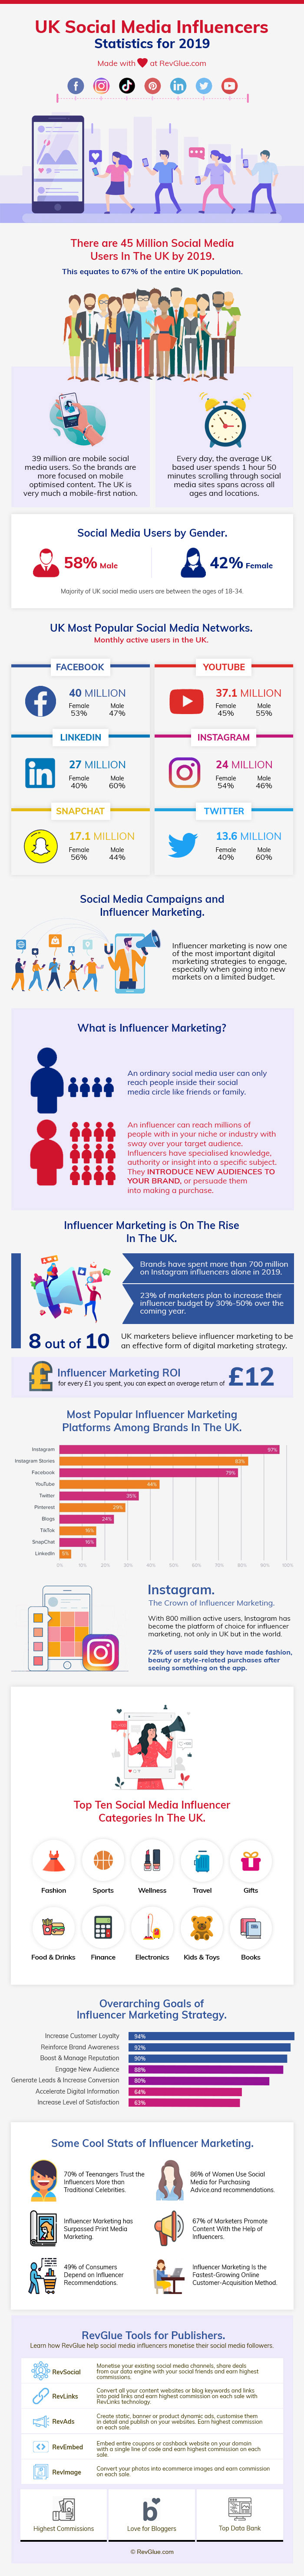 Social Media Influencers UK 2019 Stats inforgraphic - Adeel Farooq Blog